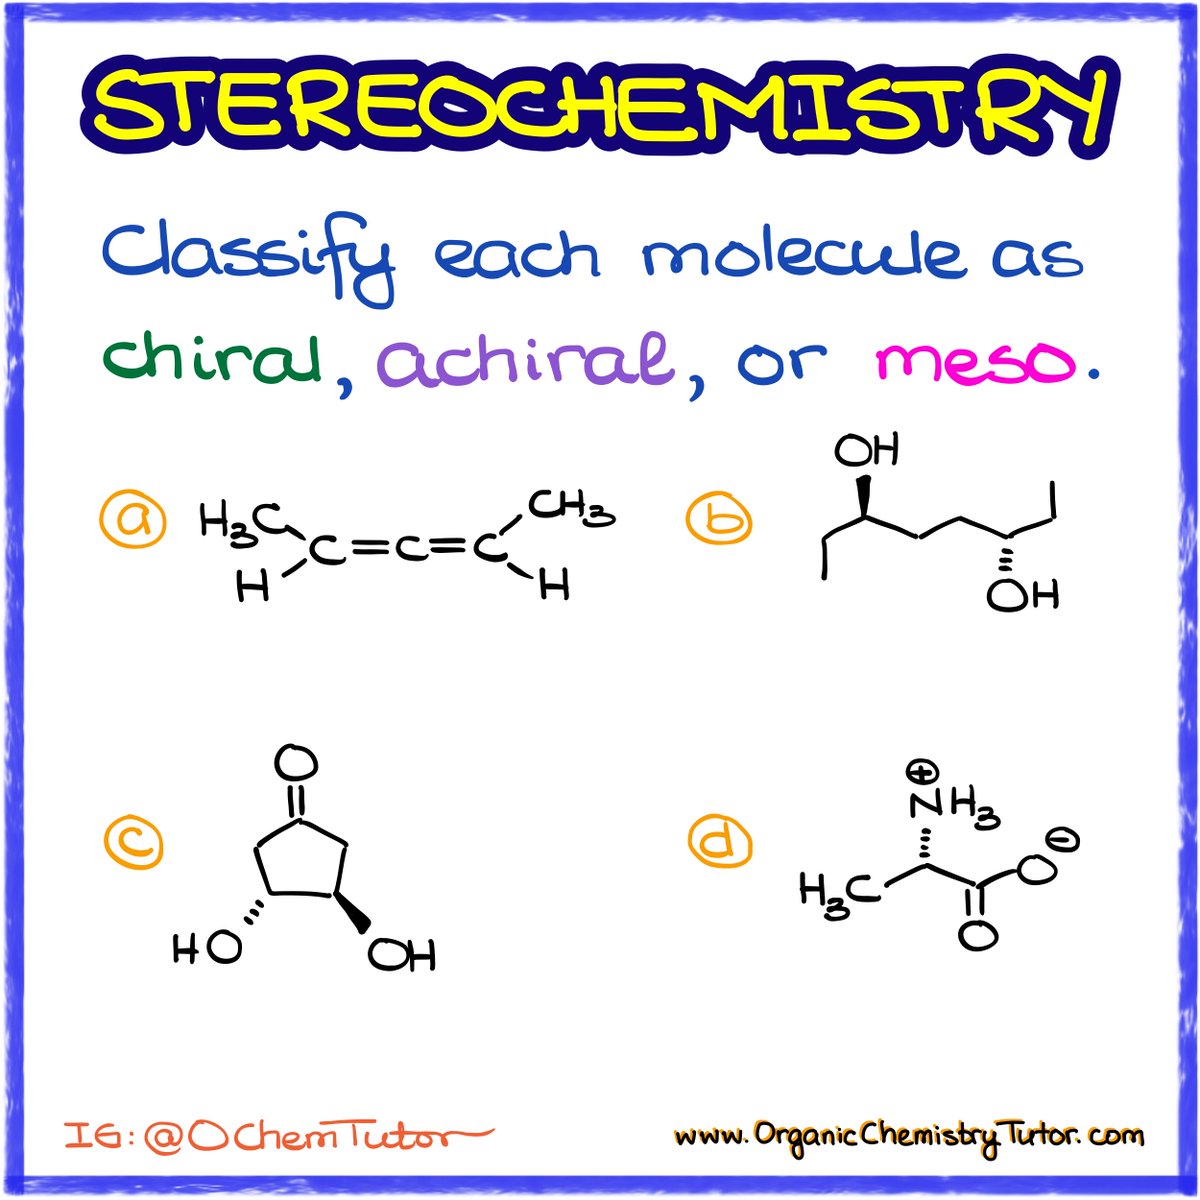 Up for an #OChemChallenge, folks?

#organicchemistry #chemistrystudent #mcat #study #chemistry